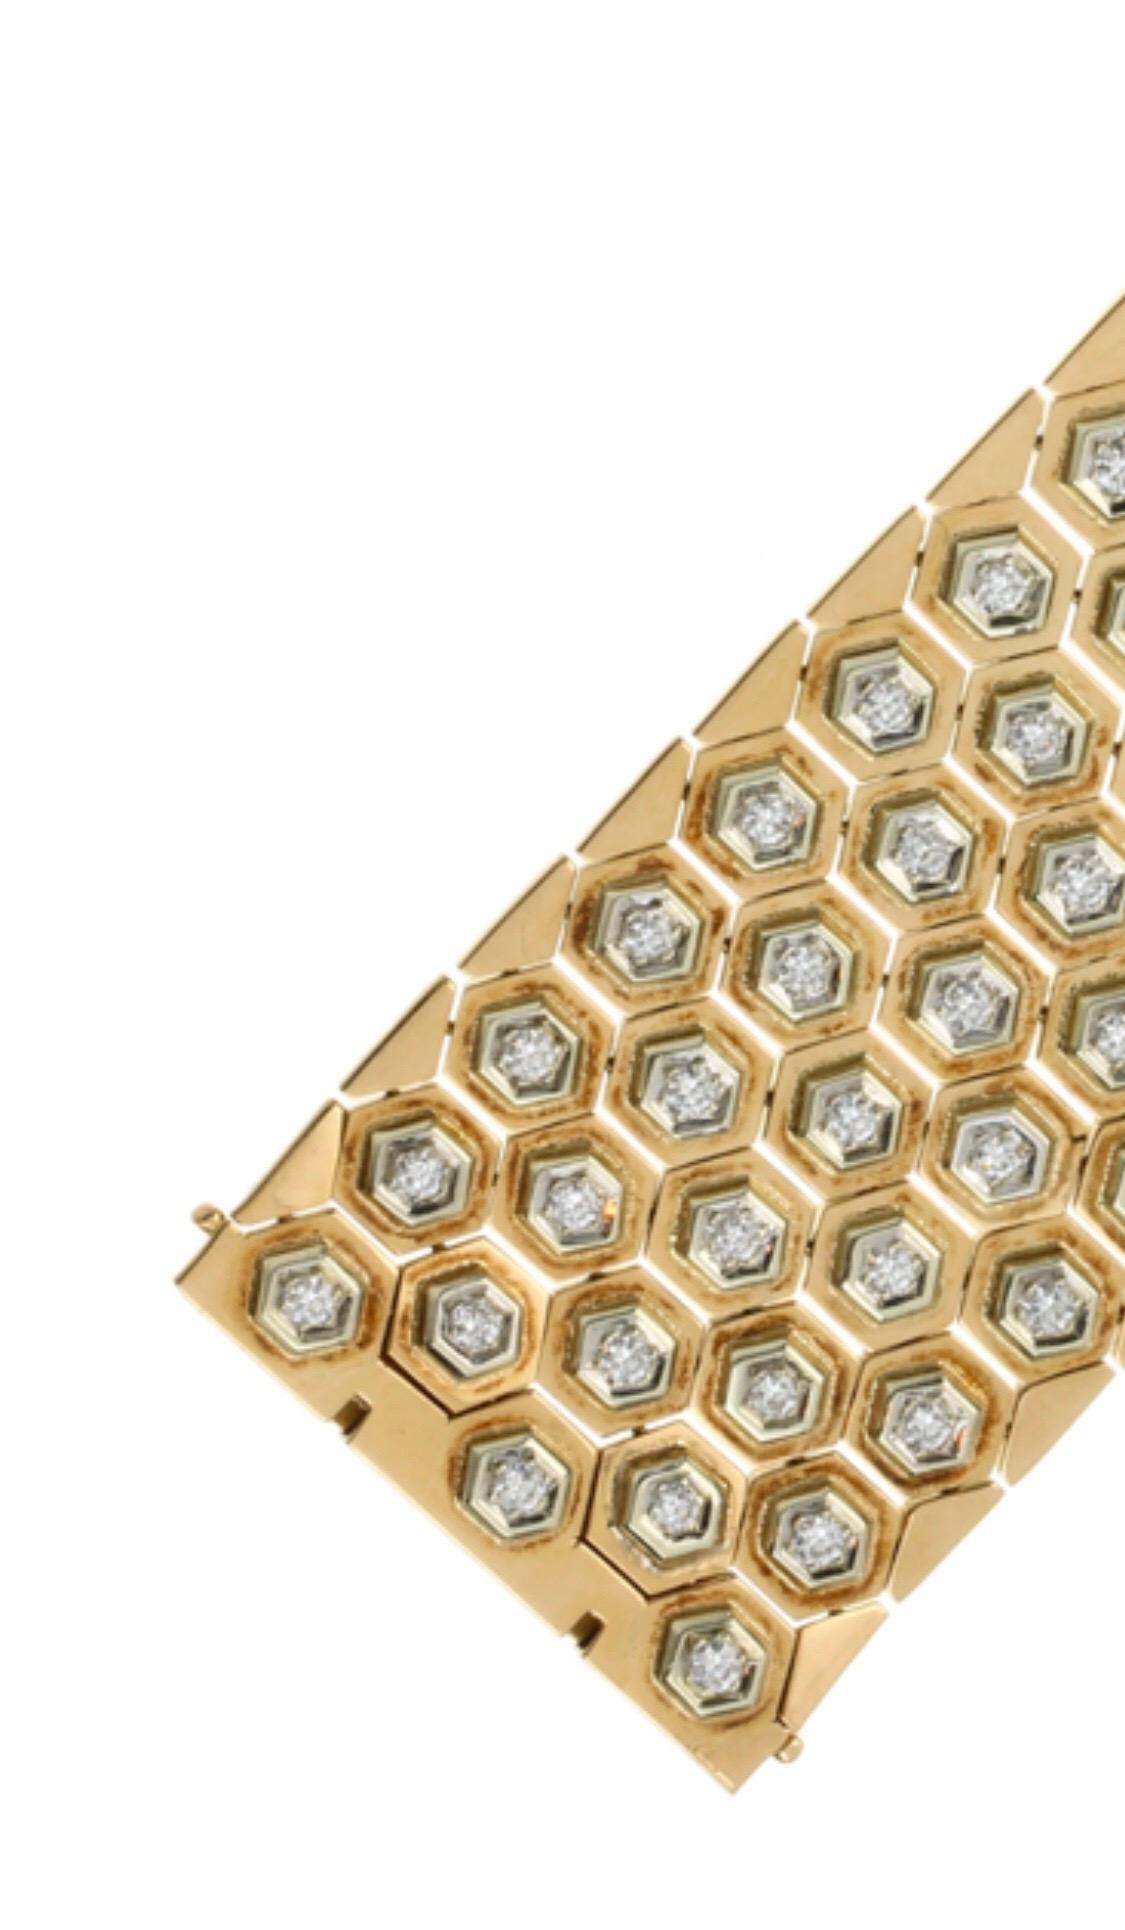 Art Deco 15 Carat Diamond Fancy Link Bracelet in 18 Karat Yellow Gold Hexagonal Links For Sale